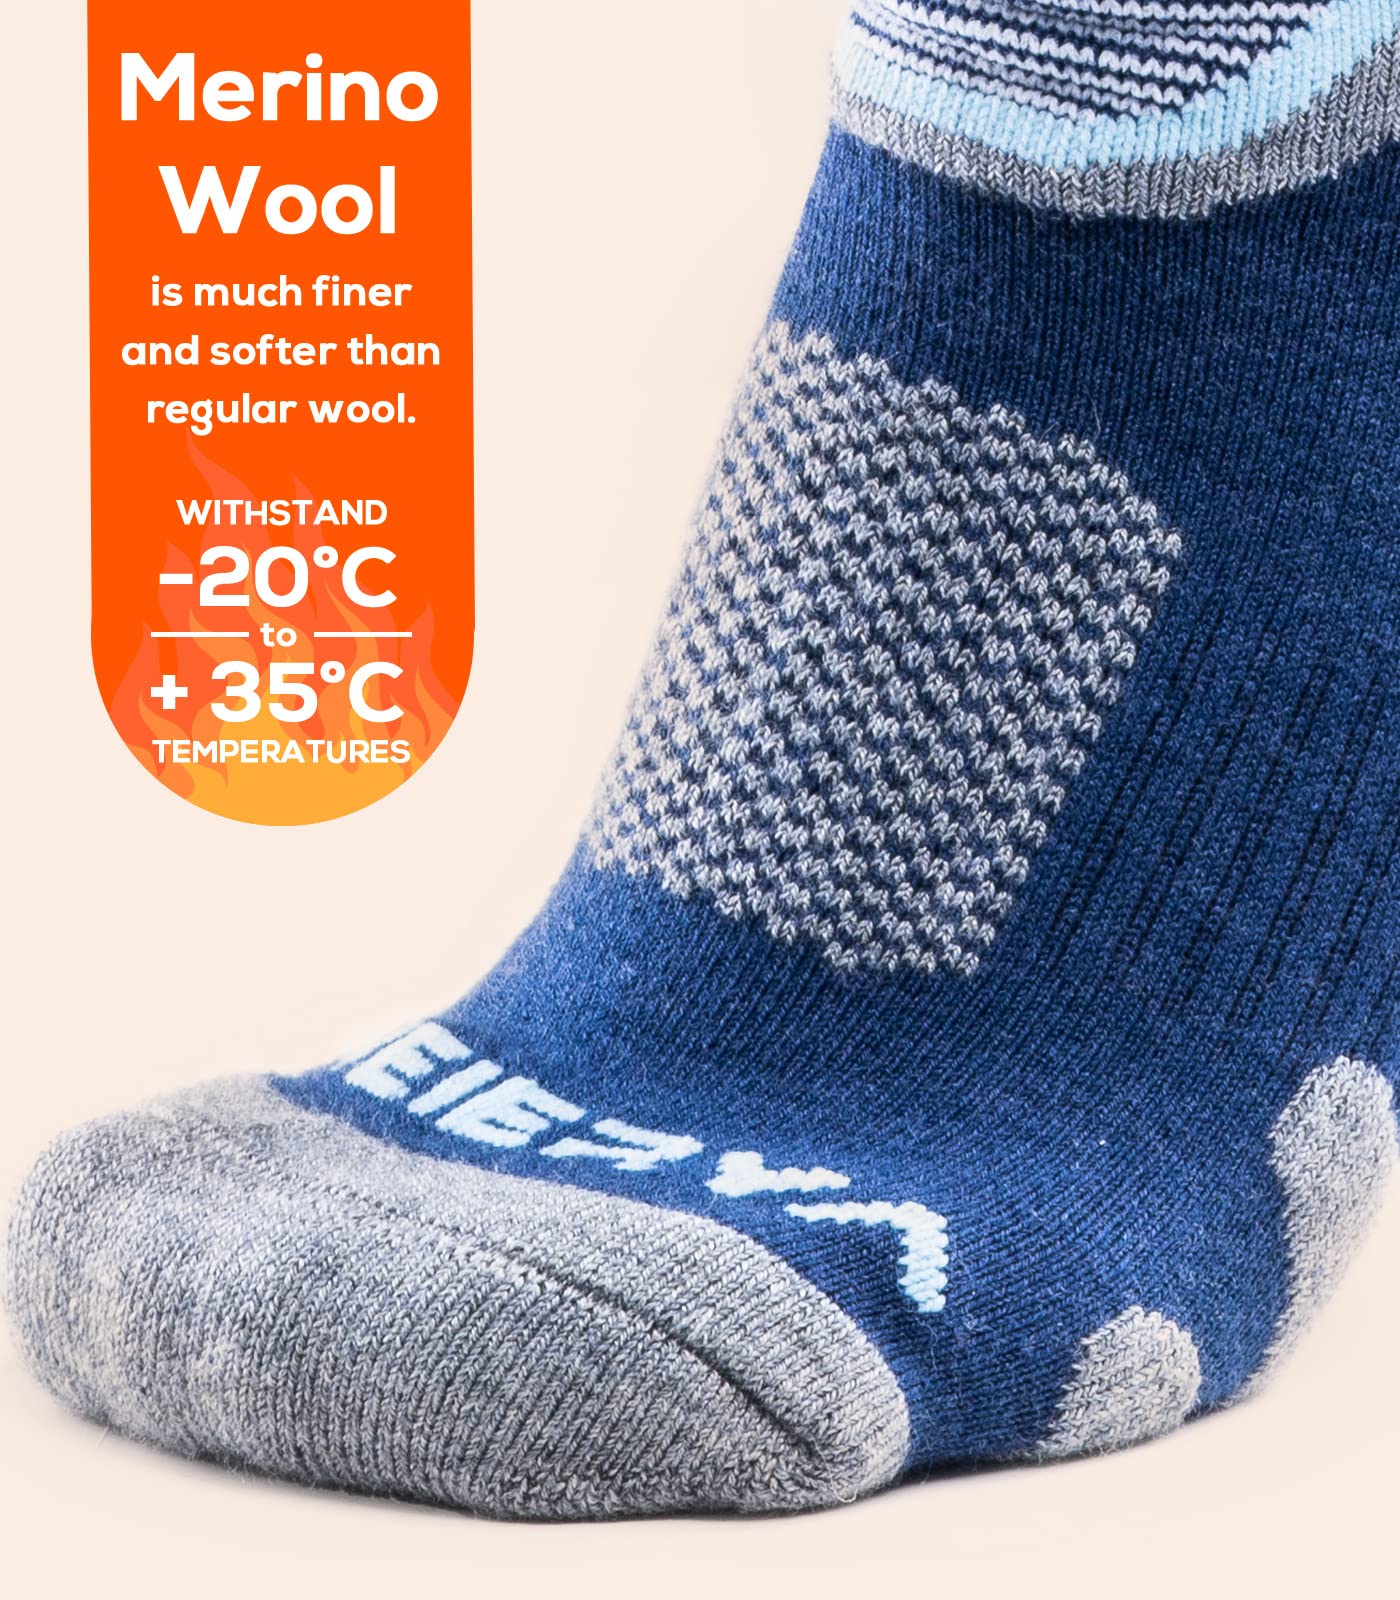 WEIERYA Merino Wool Ski Socks 2/3 Pairs Pack for Skiing, Snowboarding, Outdoor Sports Performance Socks